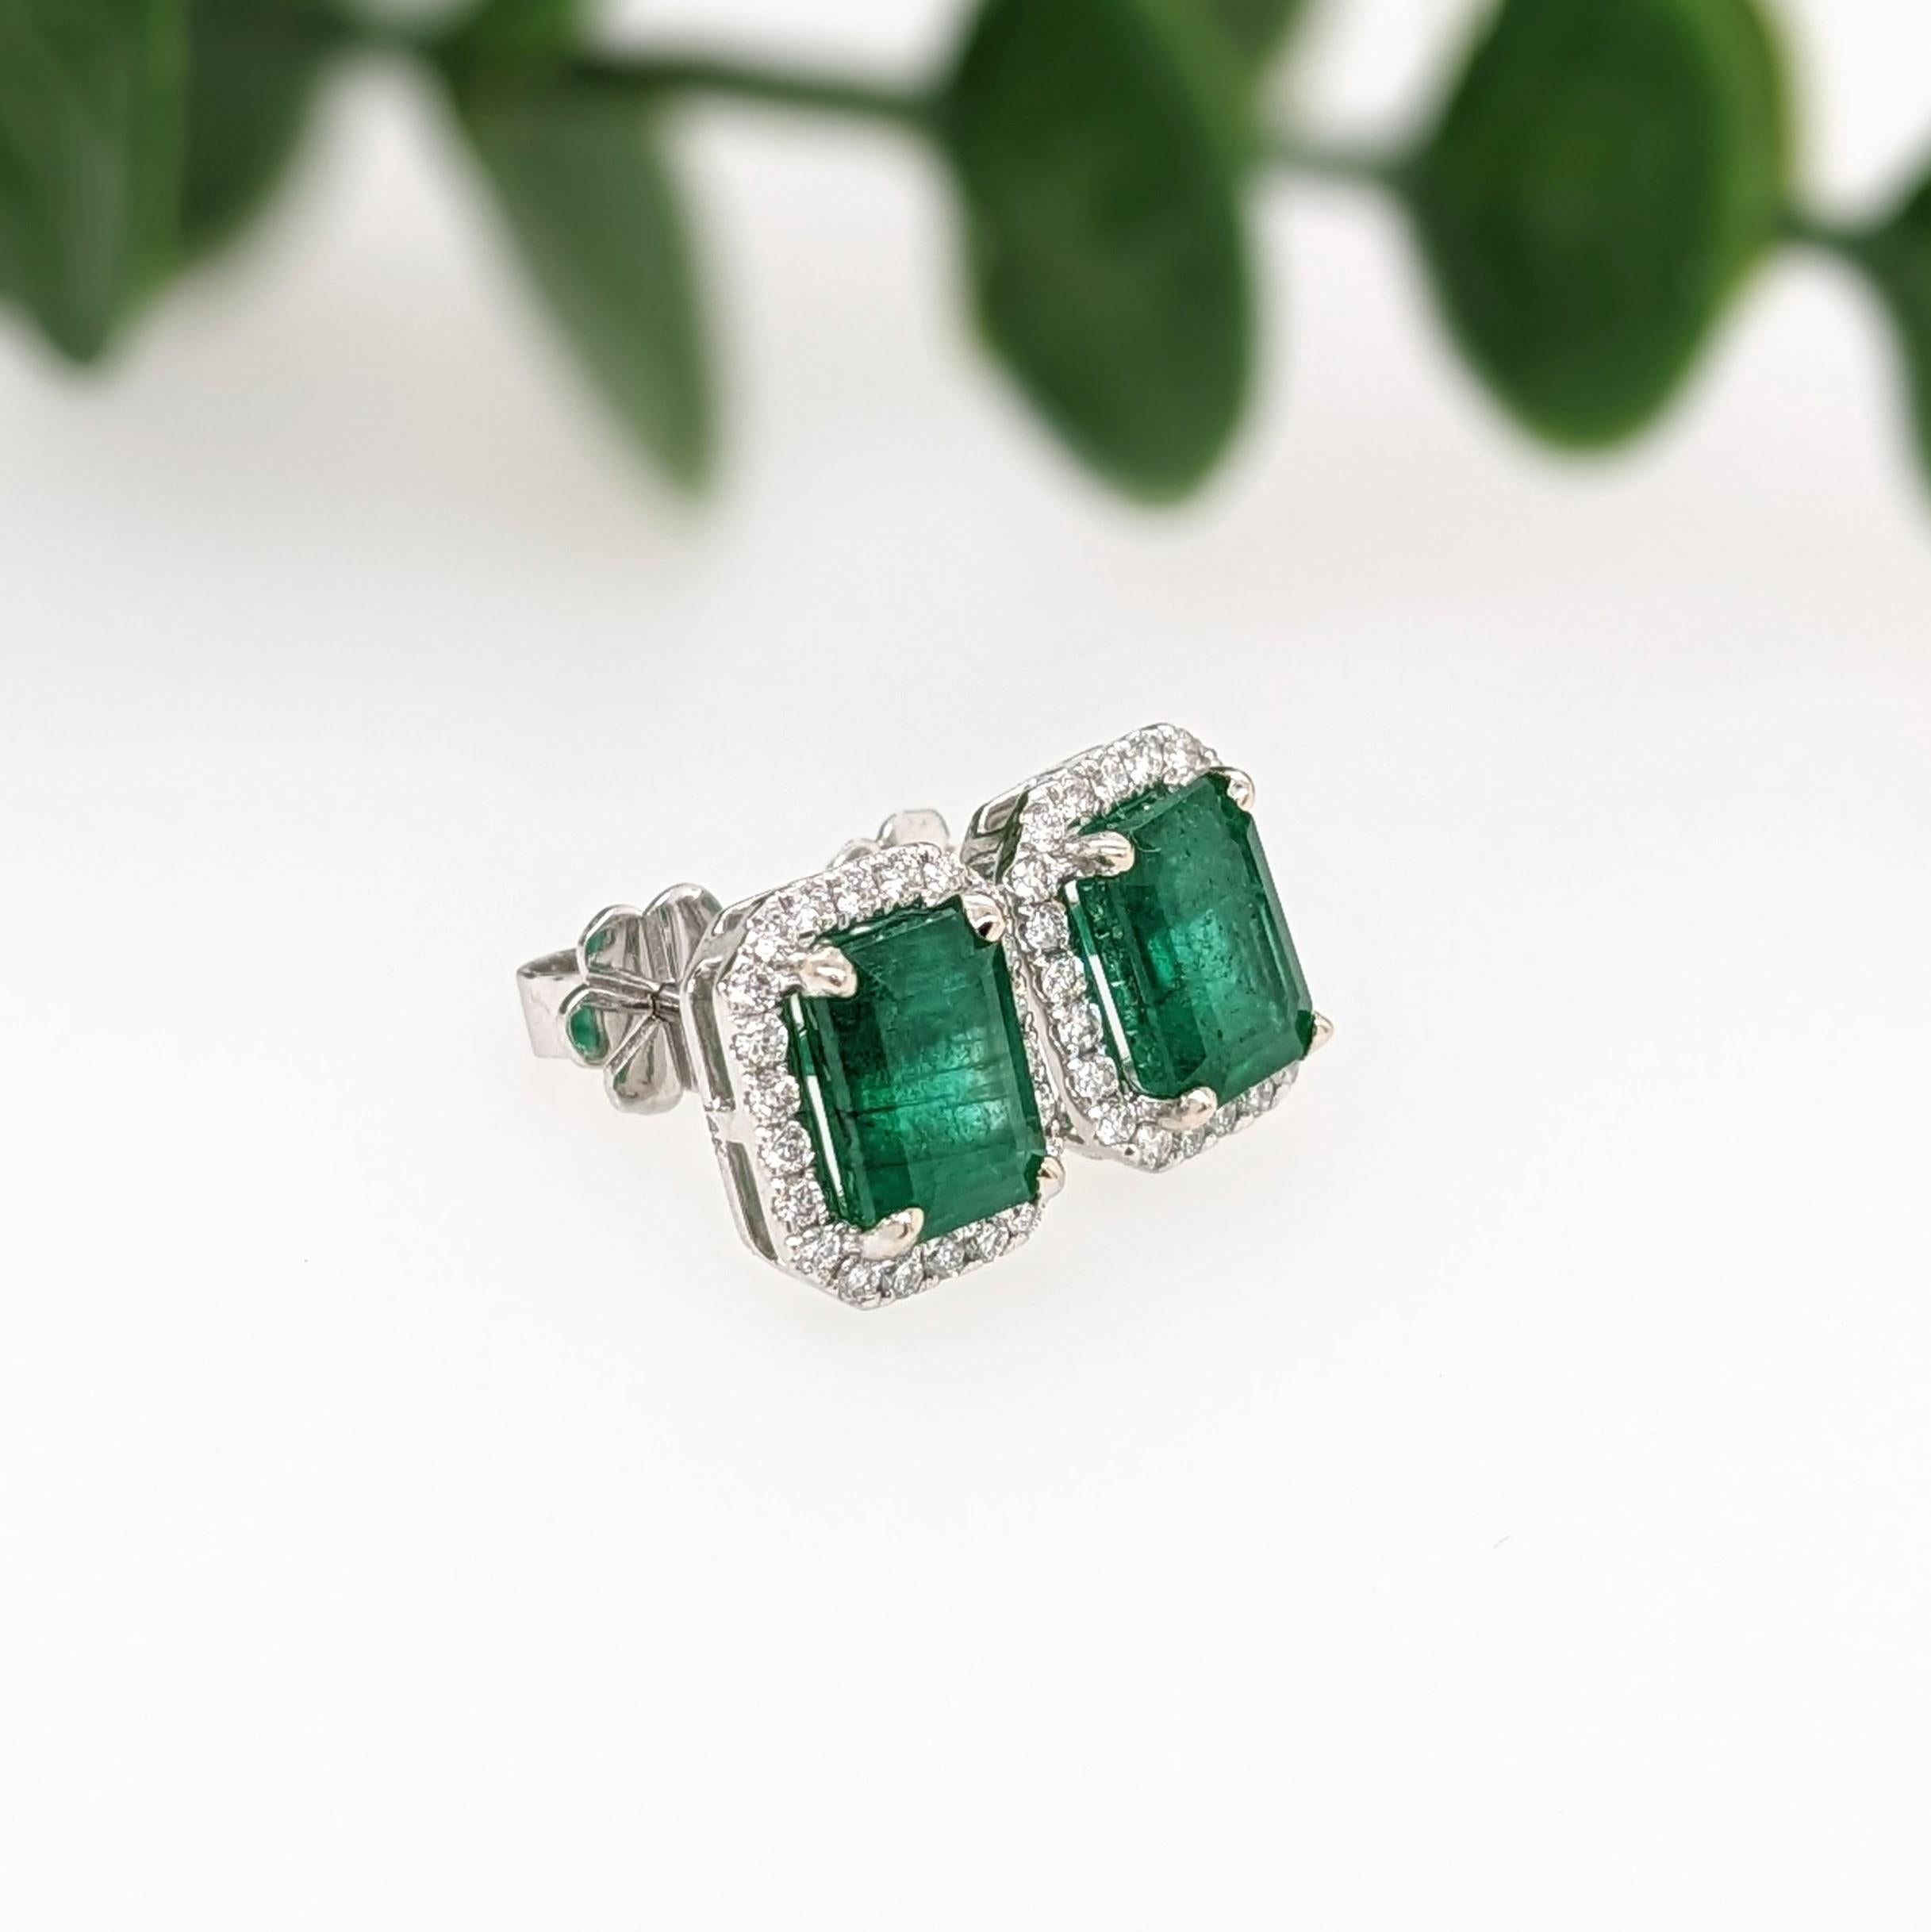 Emerald Cut 2.3ct Zambian Emerald Stud Earrings w Natural Diamond Halo in Solid 14K Gold 7x5